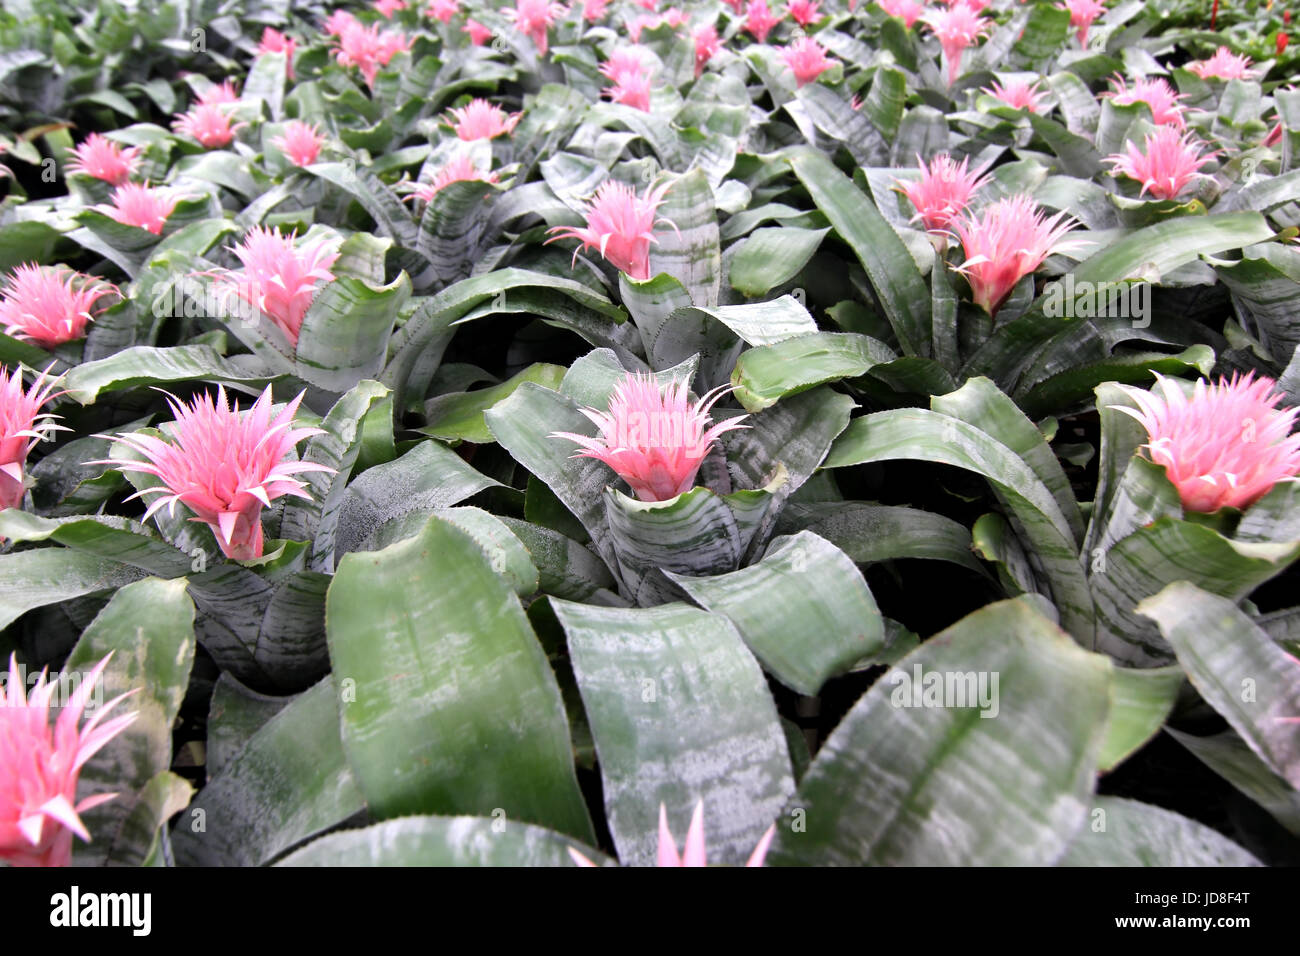 pink bromeliad guzmania magnifica flower in garden Stock Photo